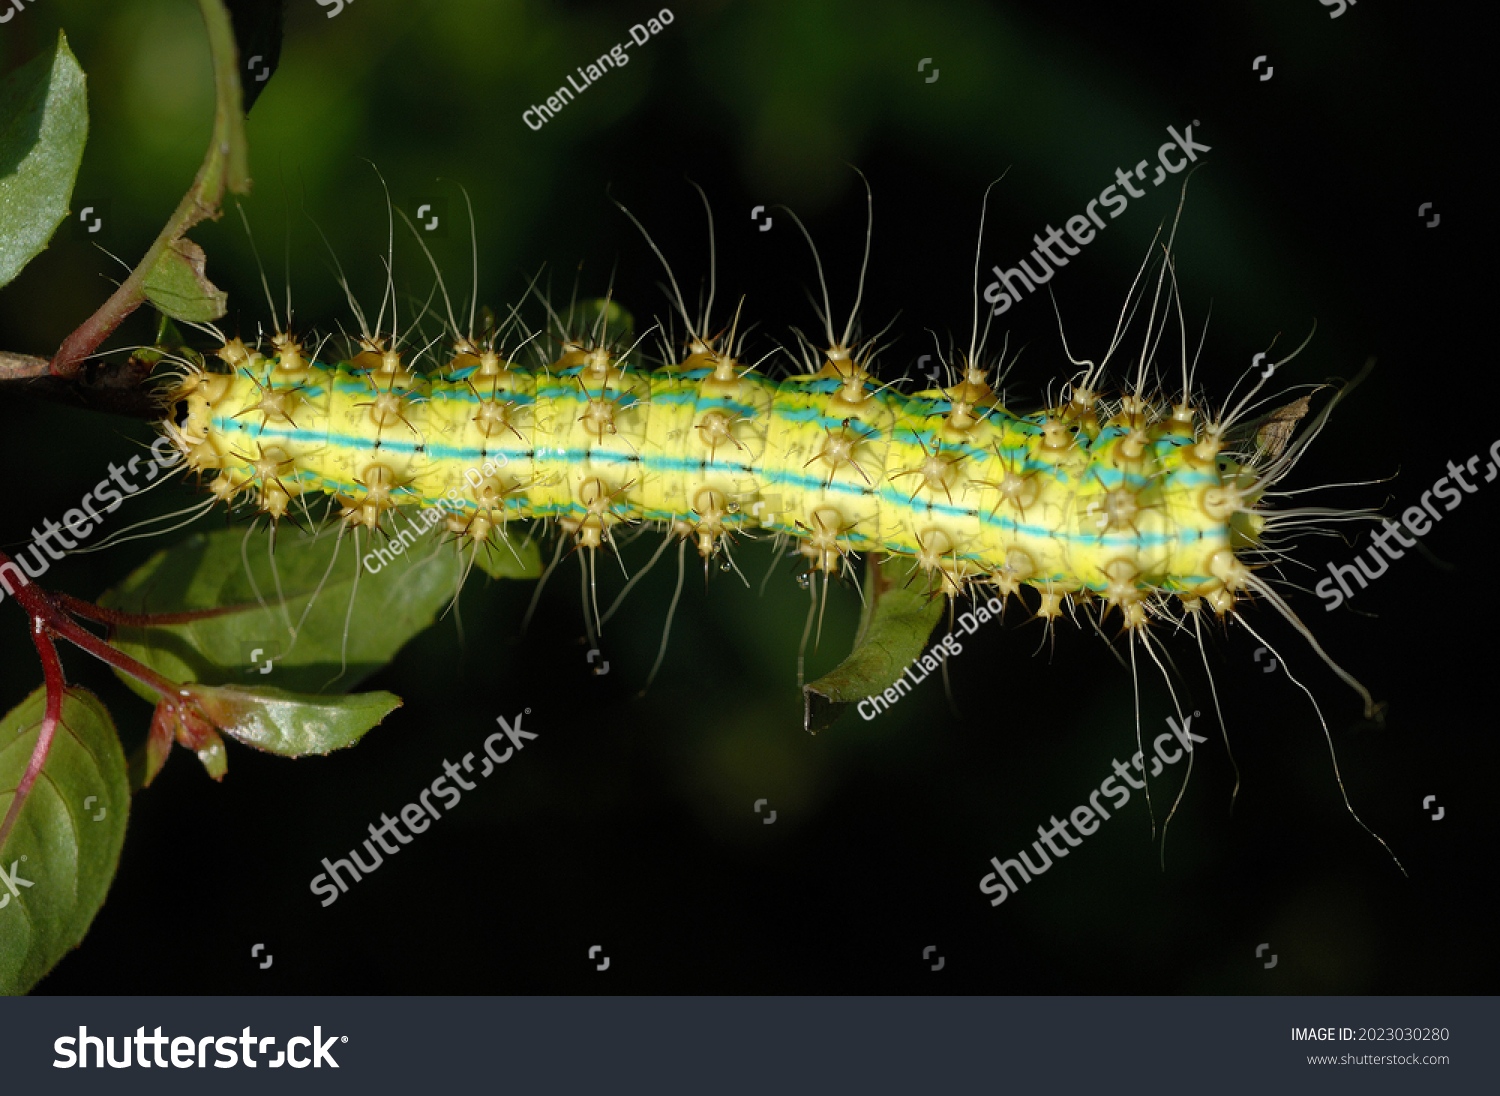 Invertebrate caterpillar on forest leaf #2023030280